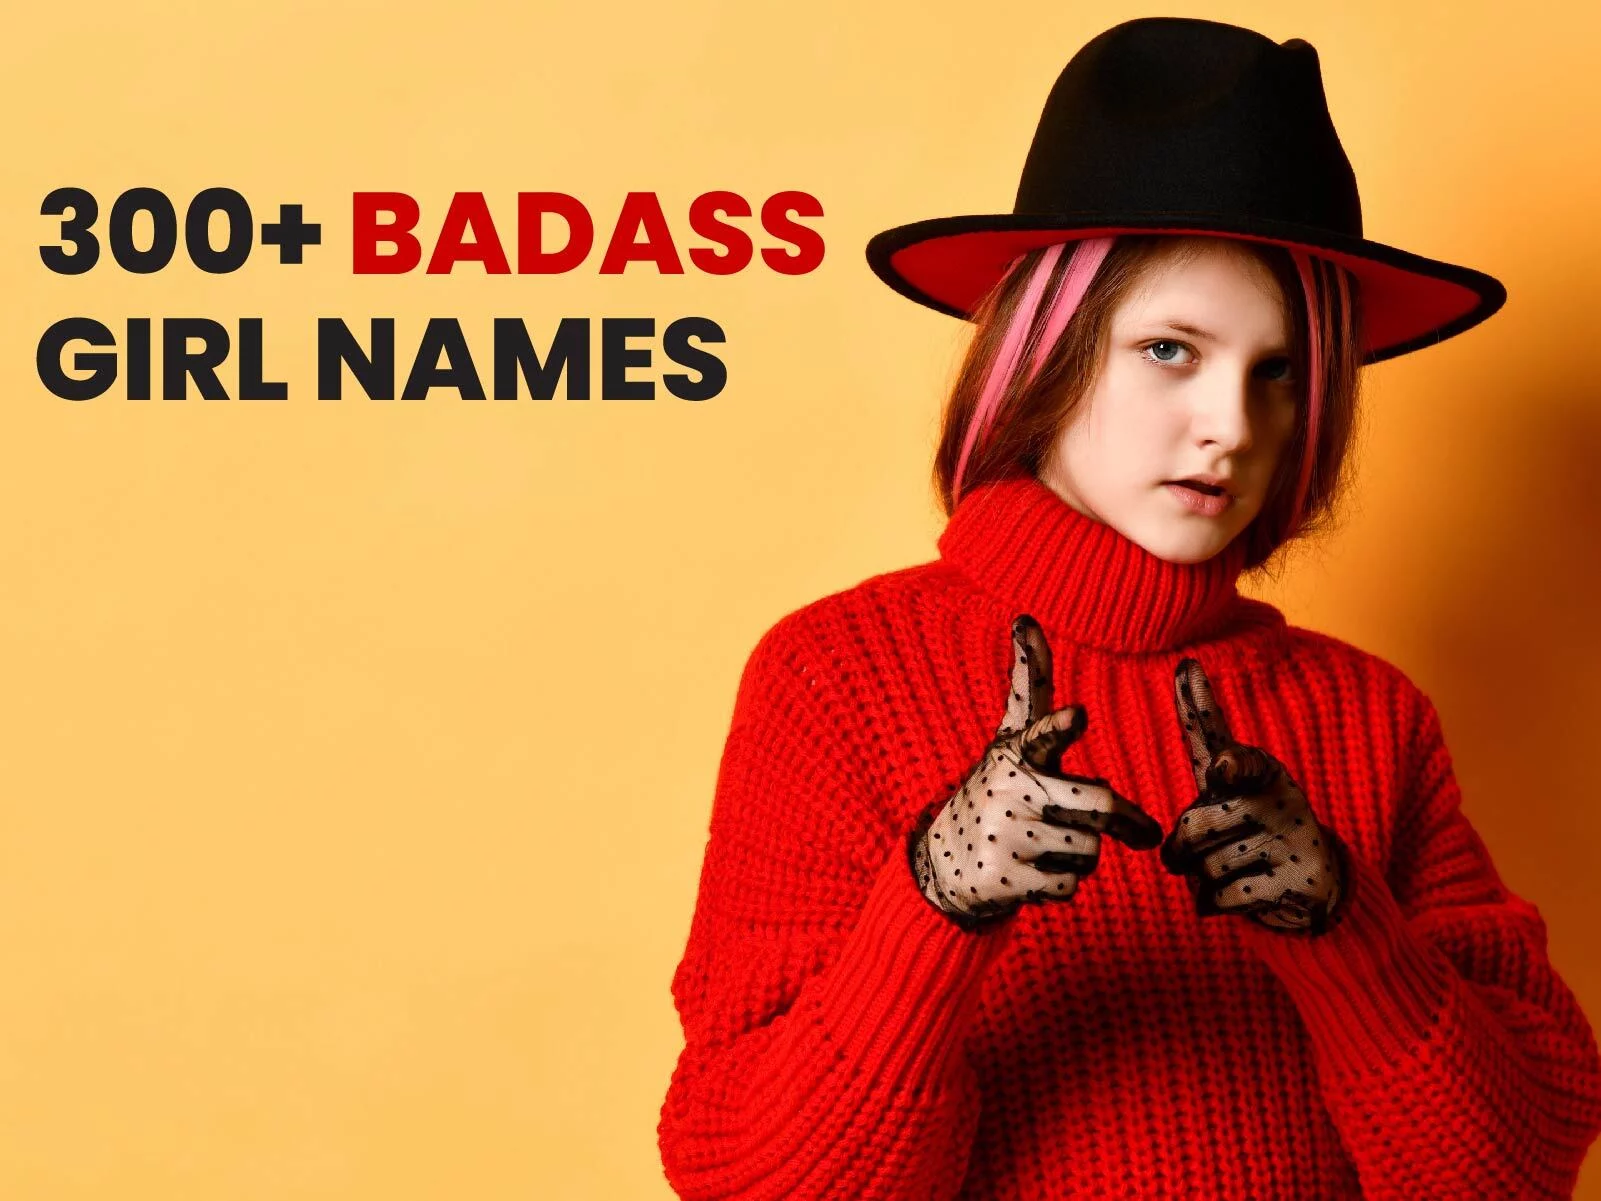 300+ badass girl names